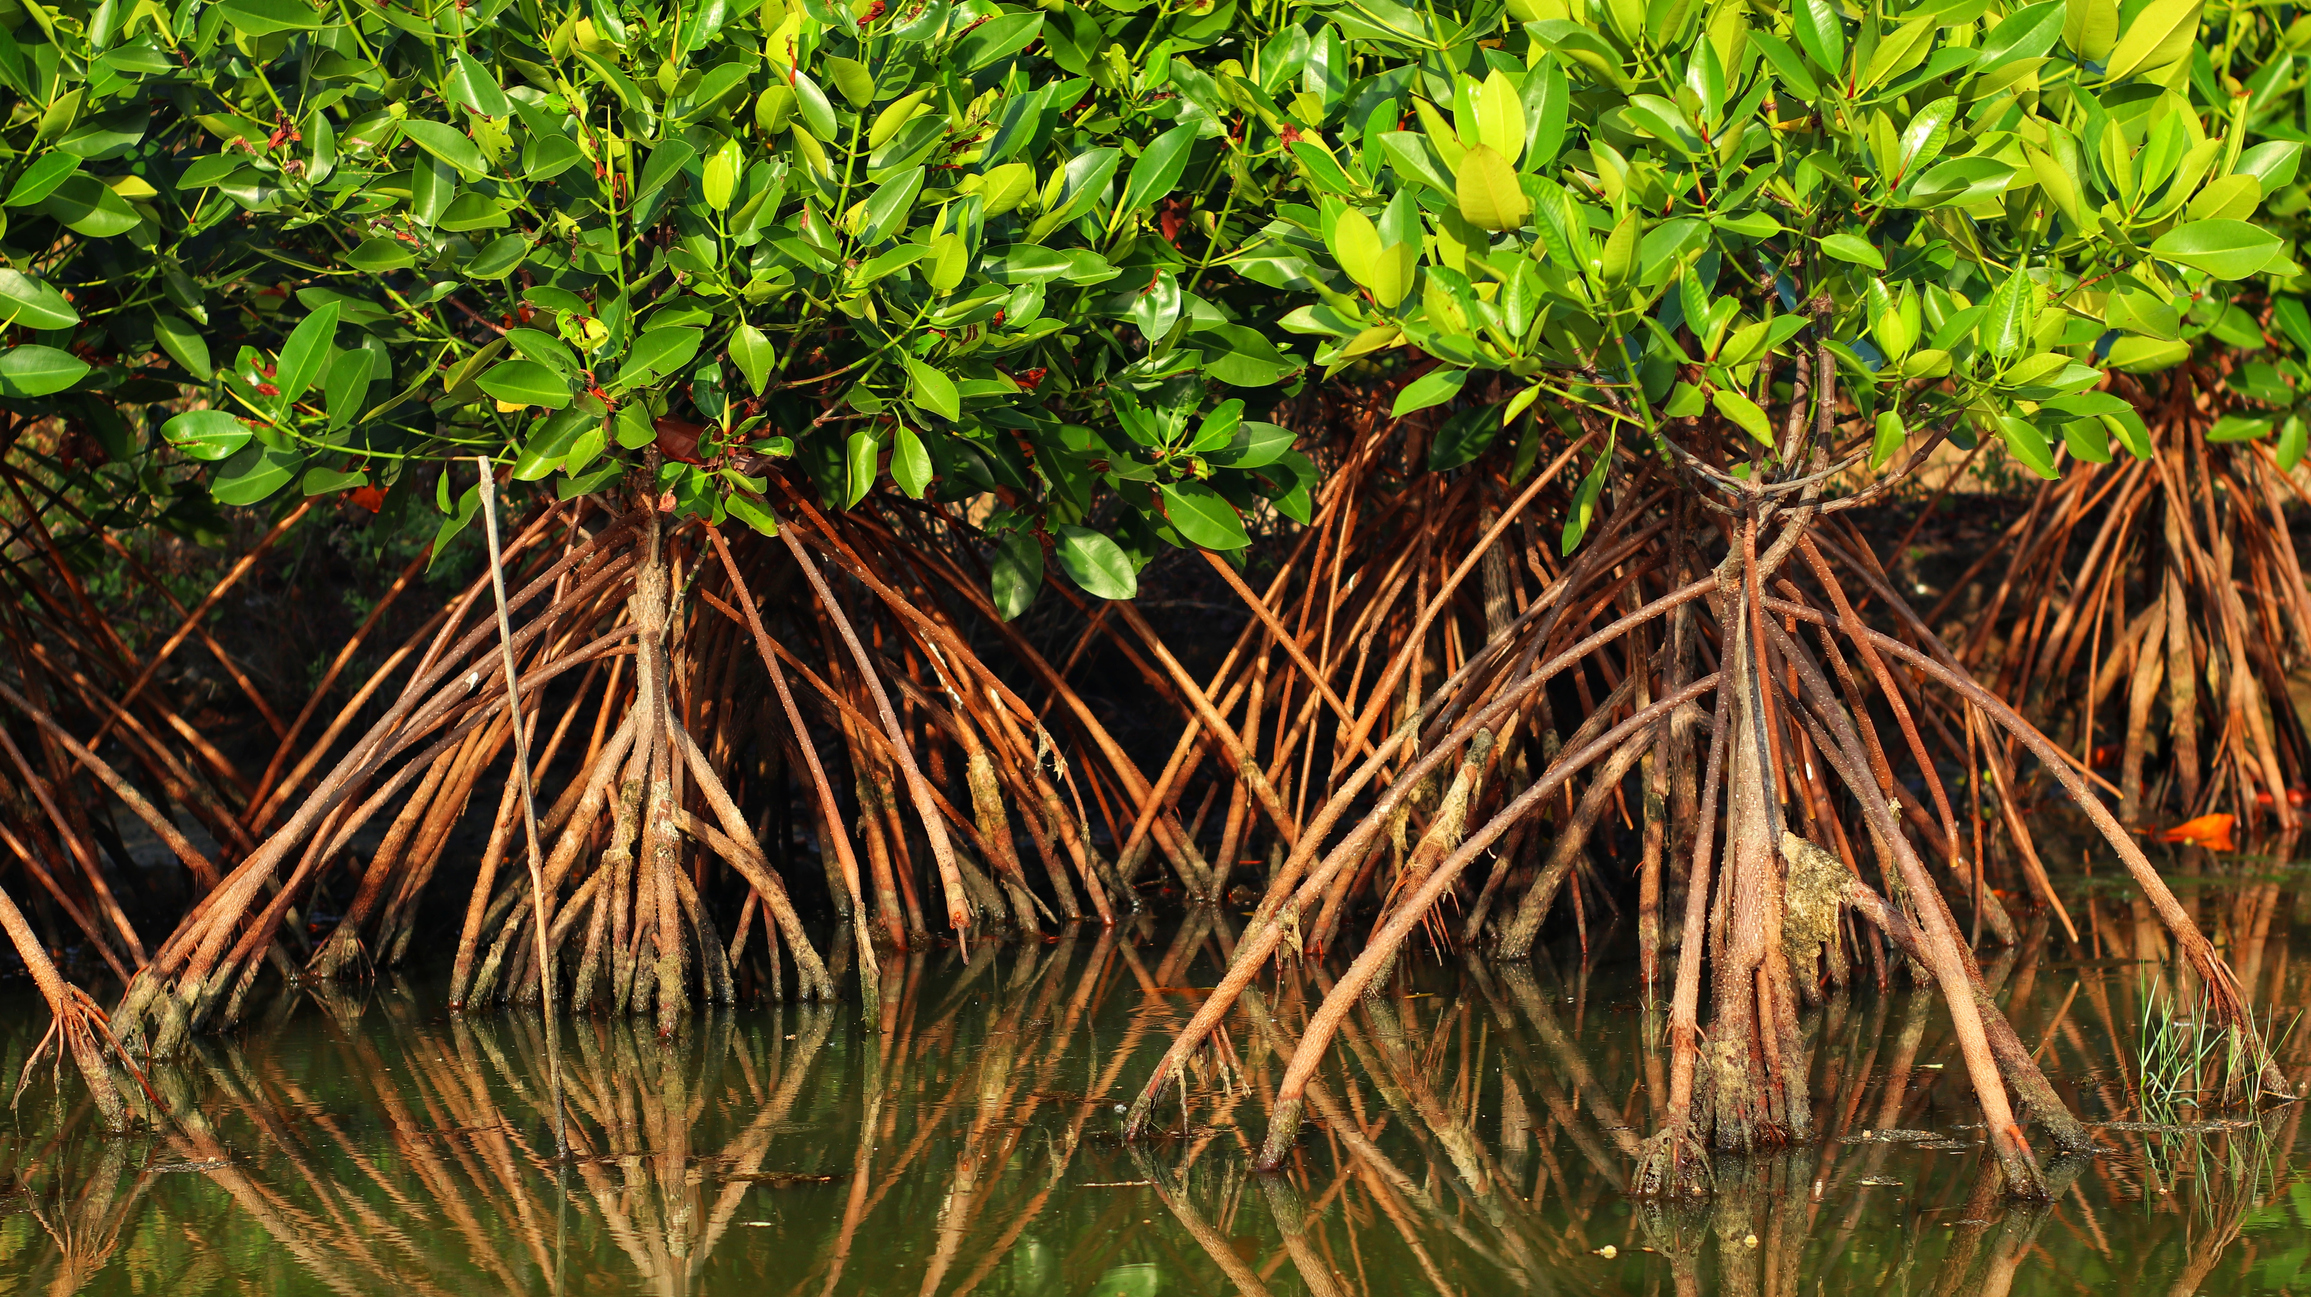 Journee-internationale-des-mangroves